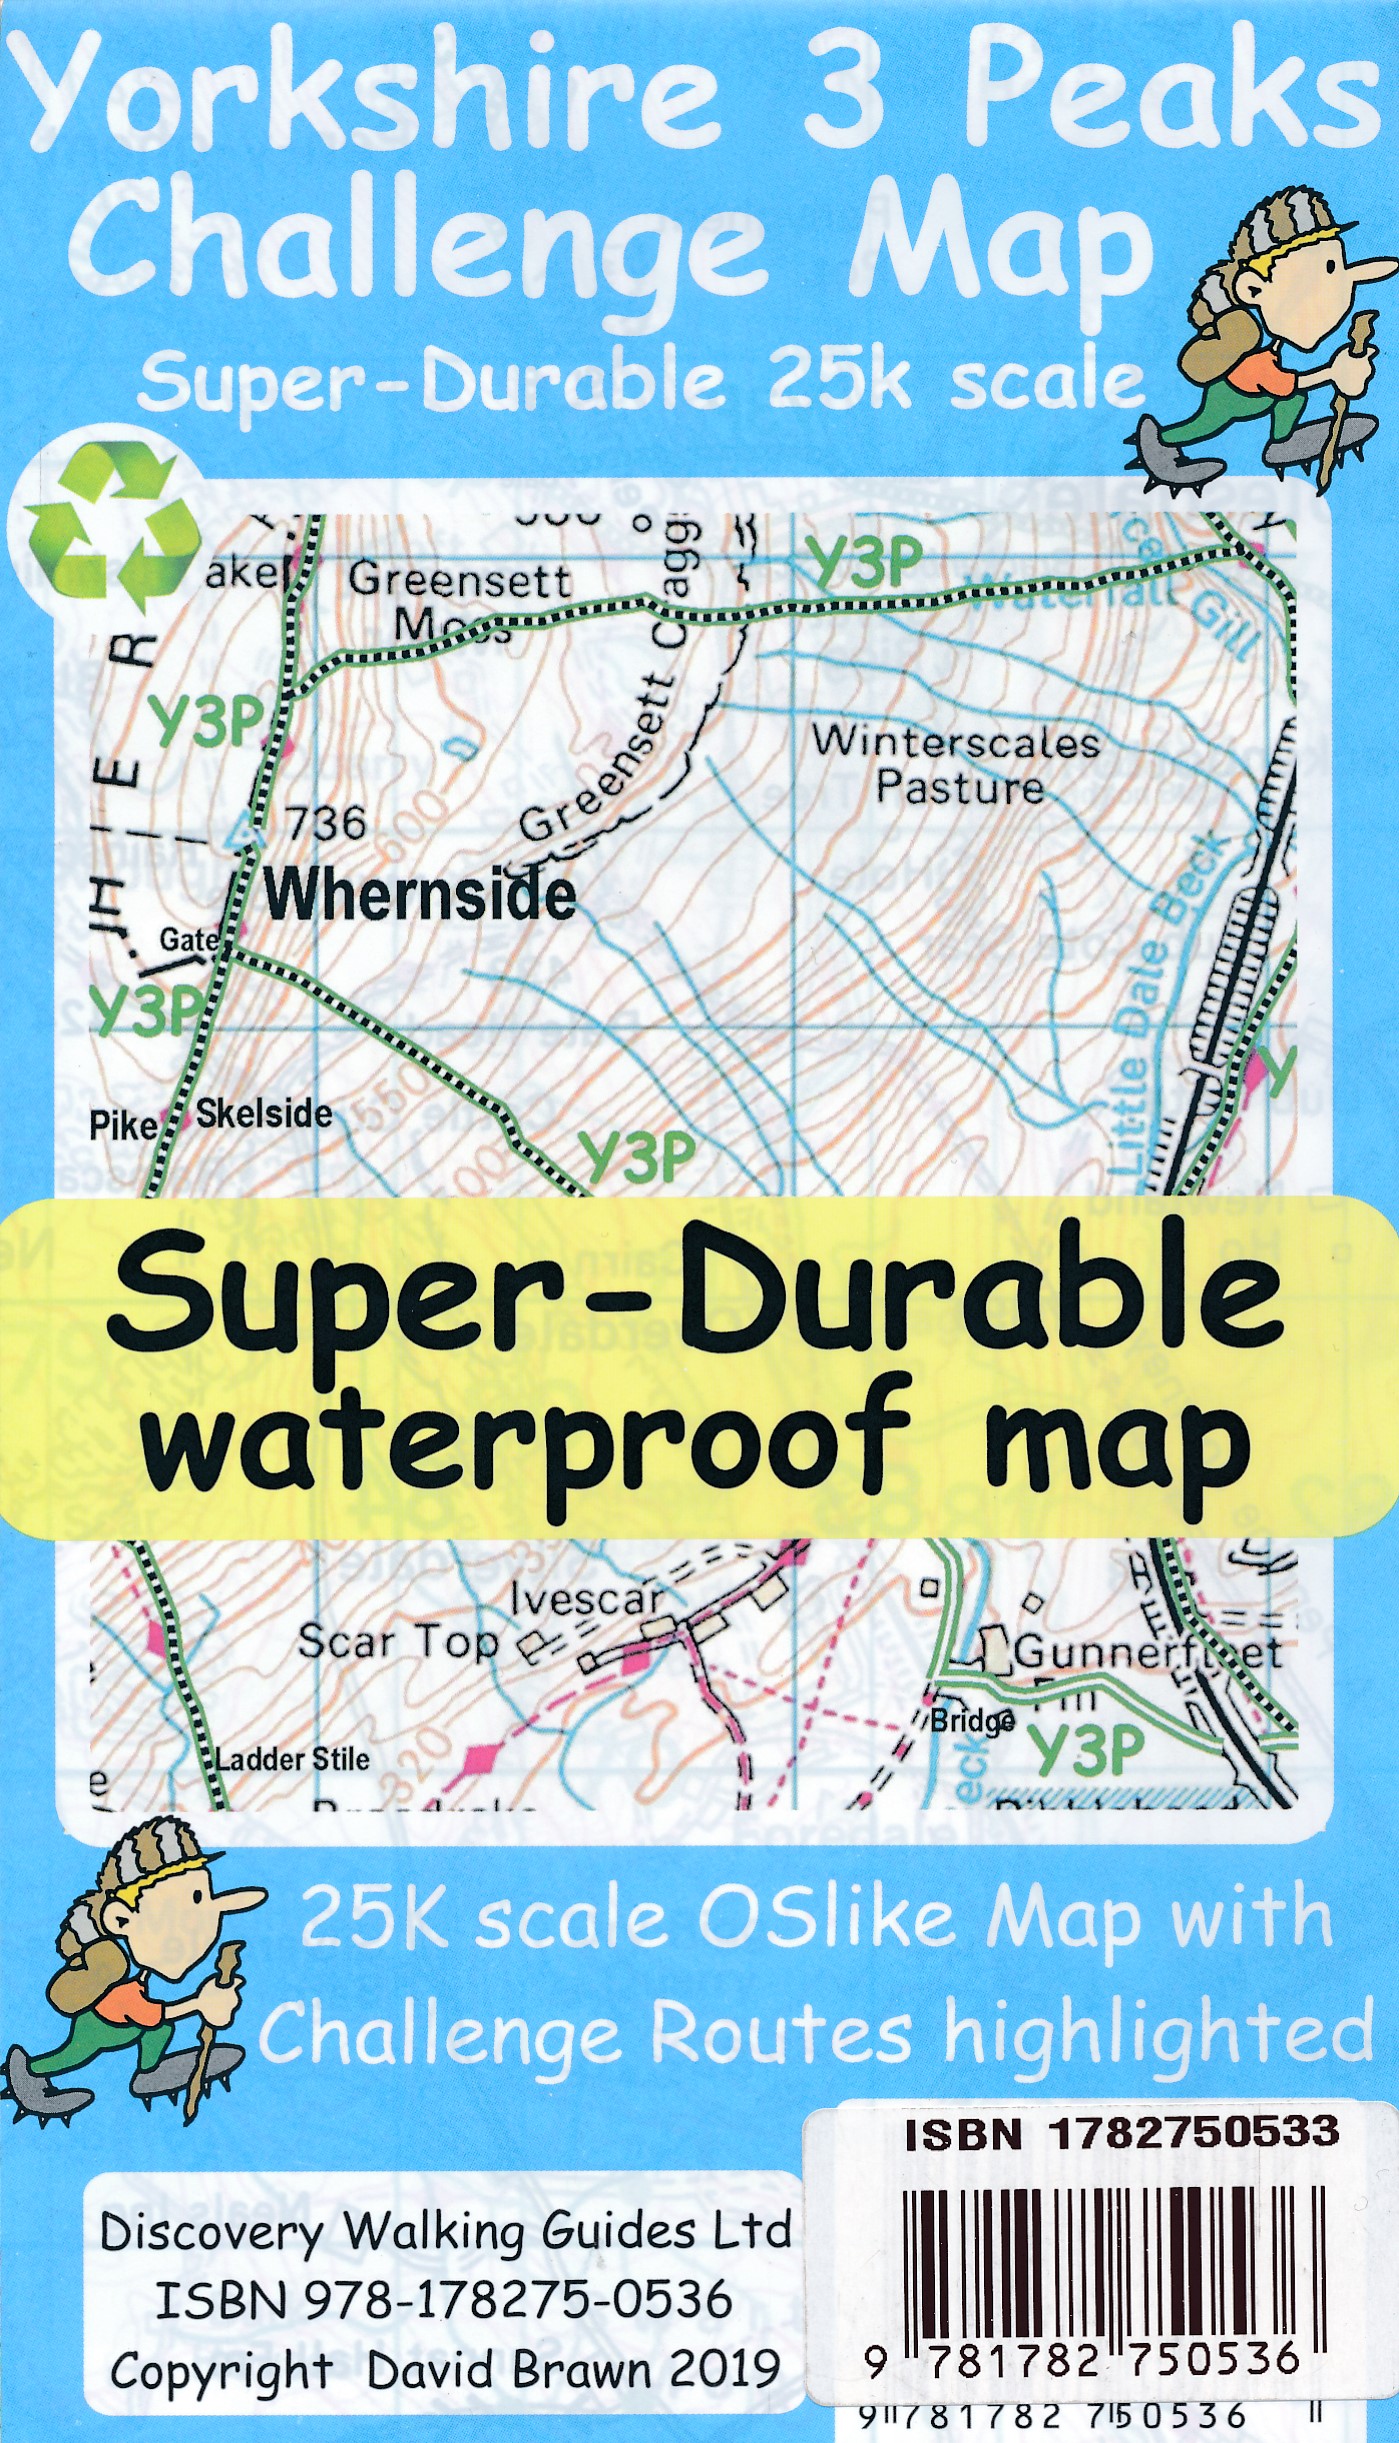 Online bestellen: Wandelkaart Yorkshire 3 Peaks Challenge Map | Discovery Walking Guides